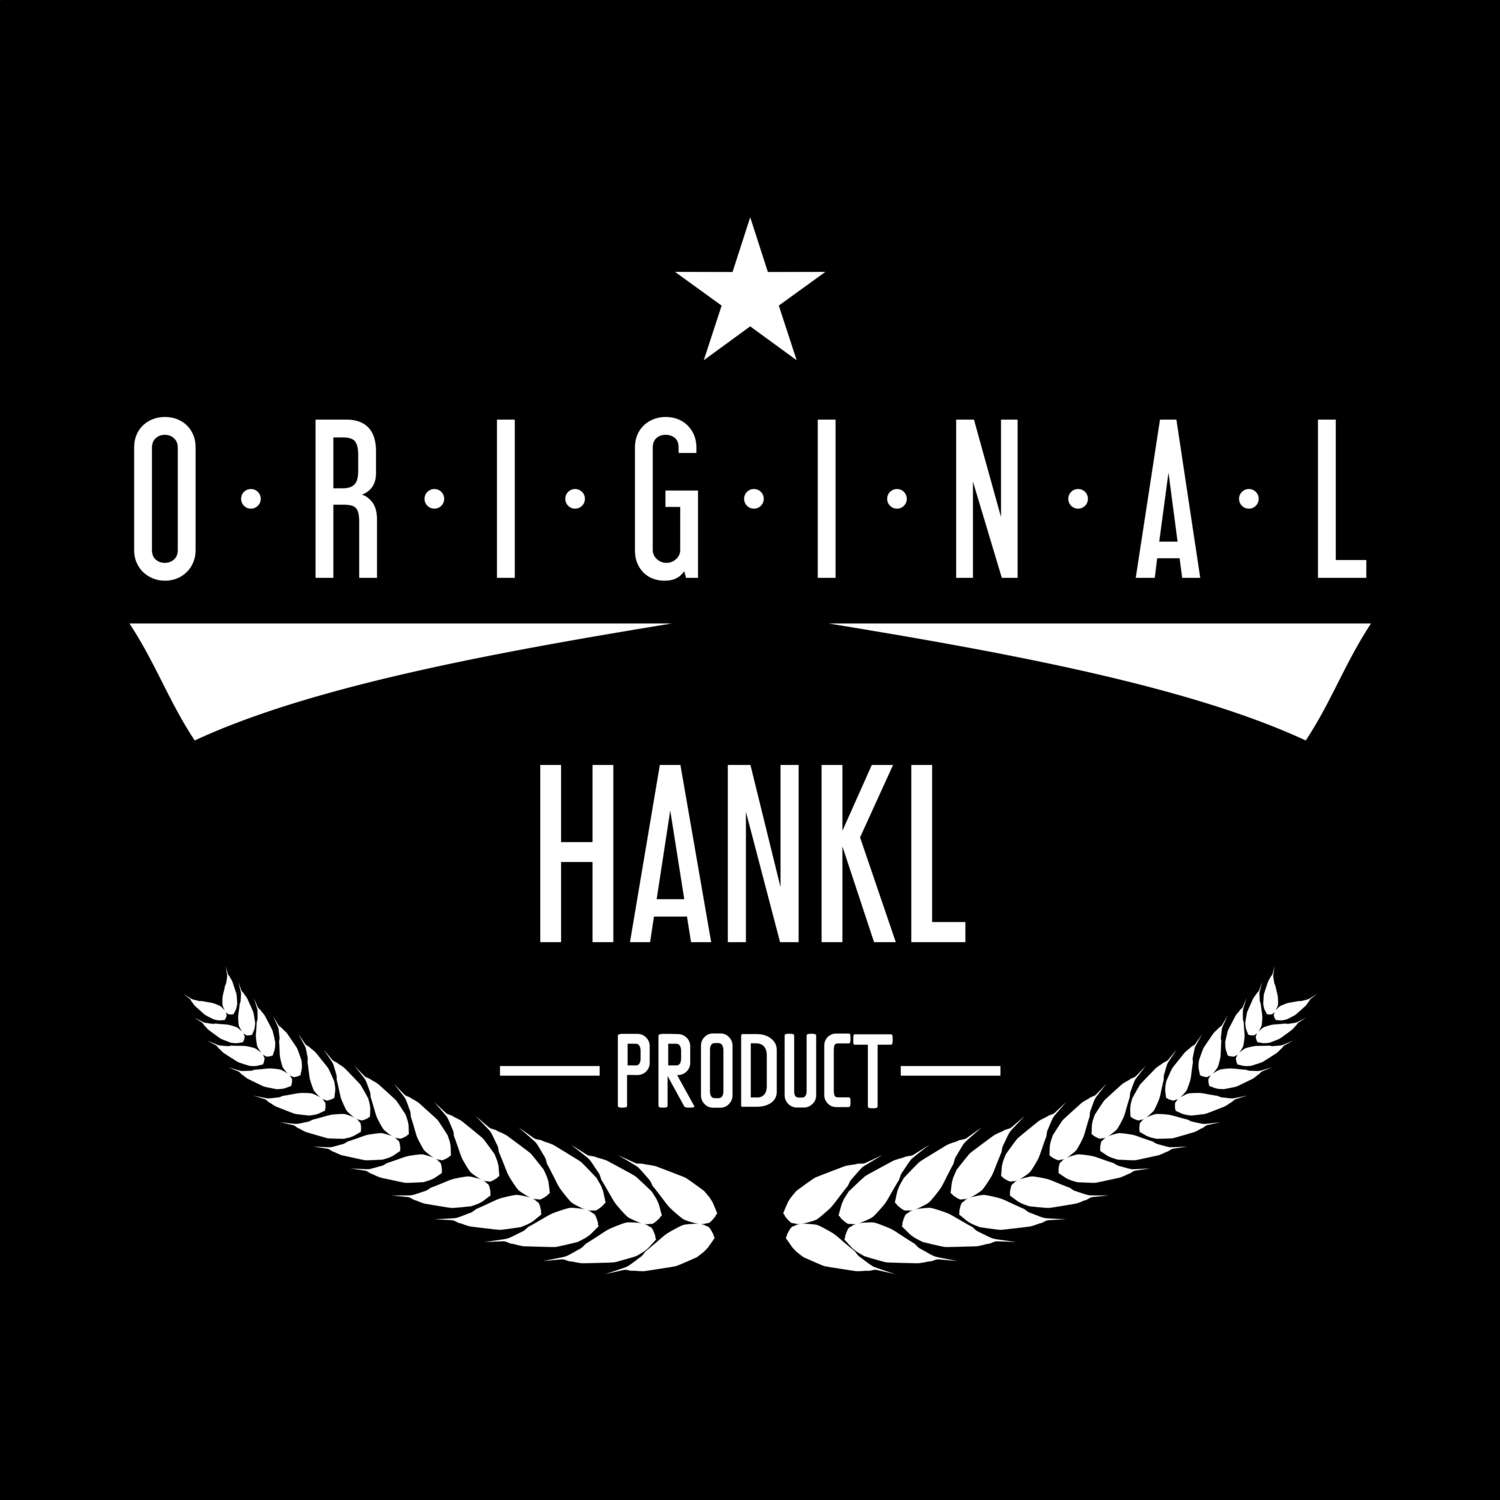 Hankl T-Shirt »Original Product«